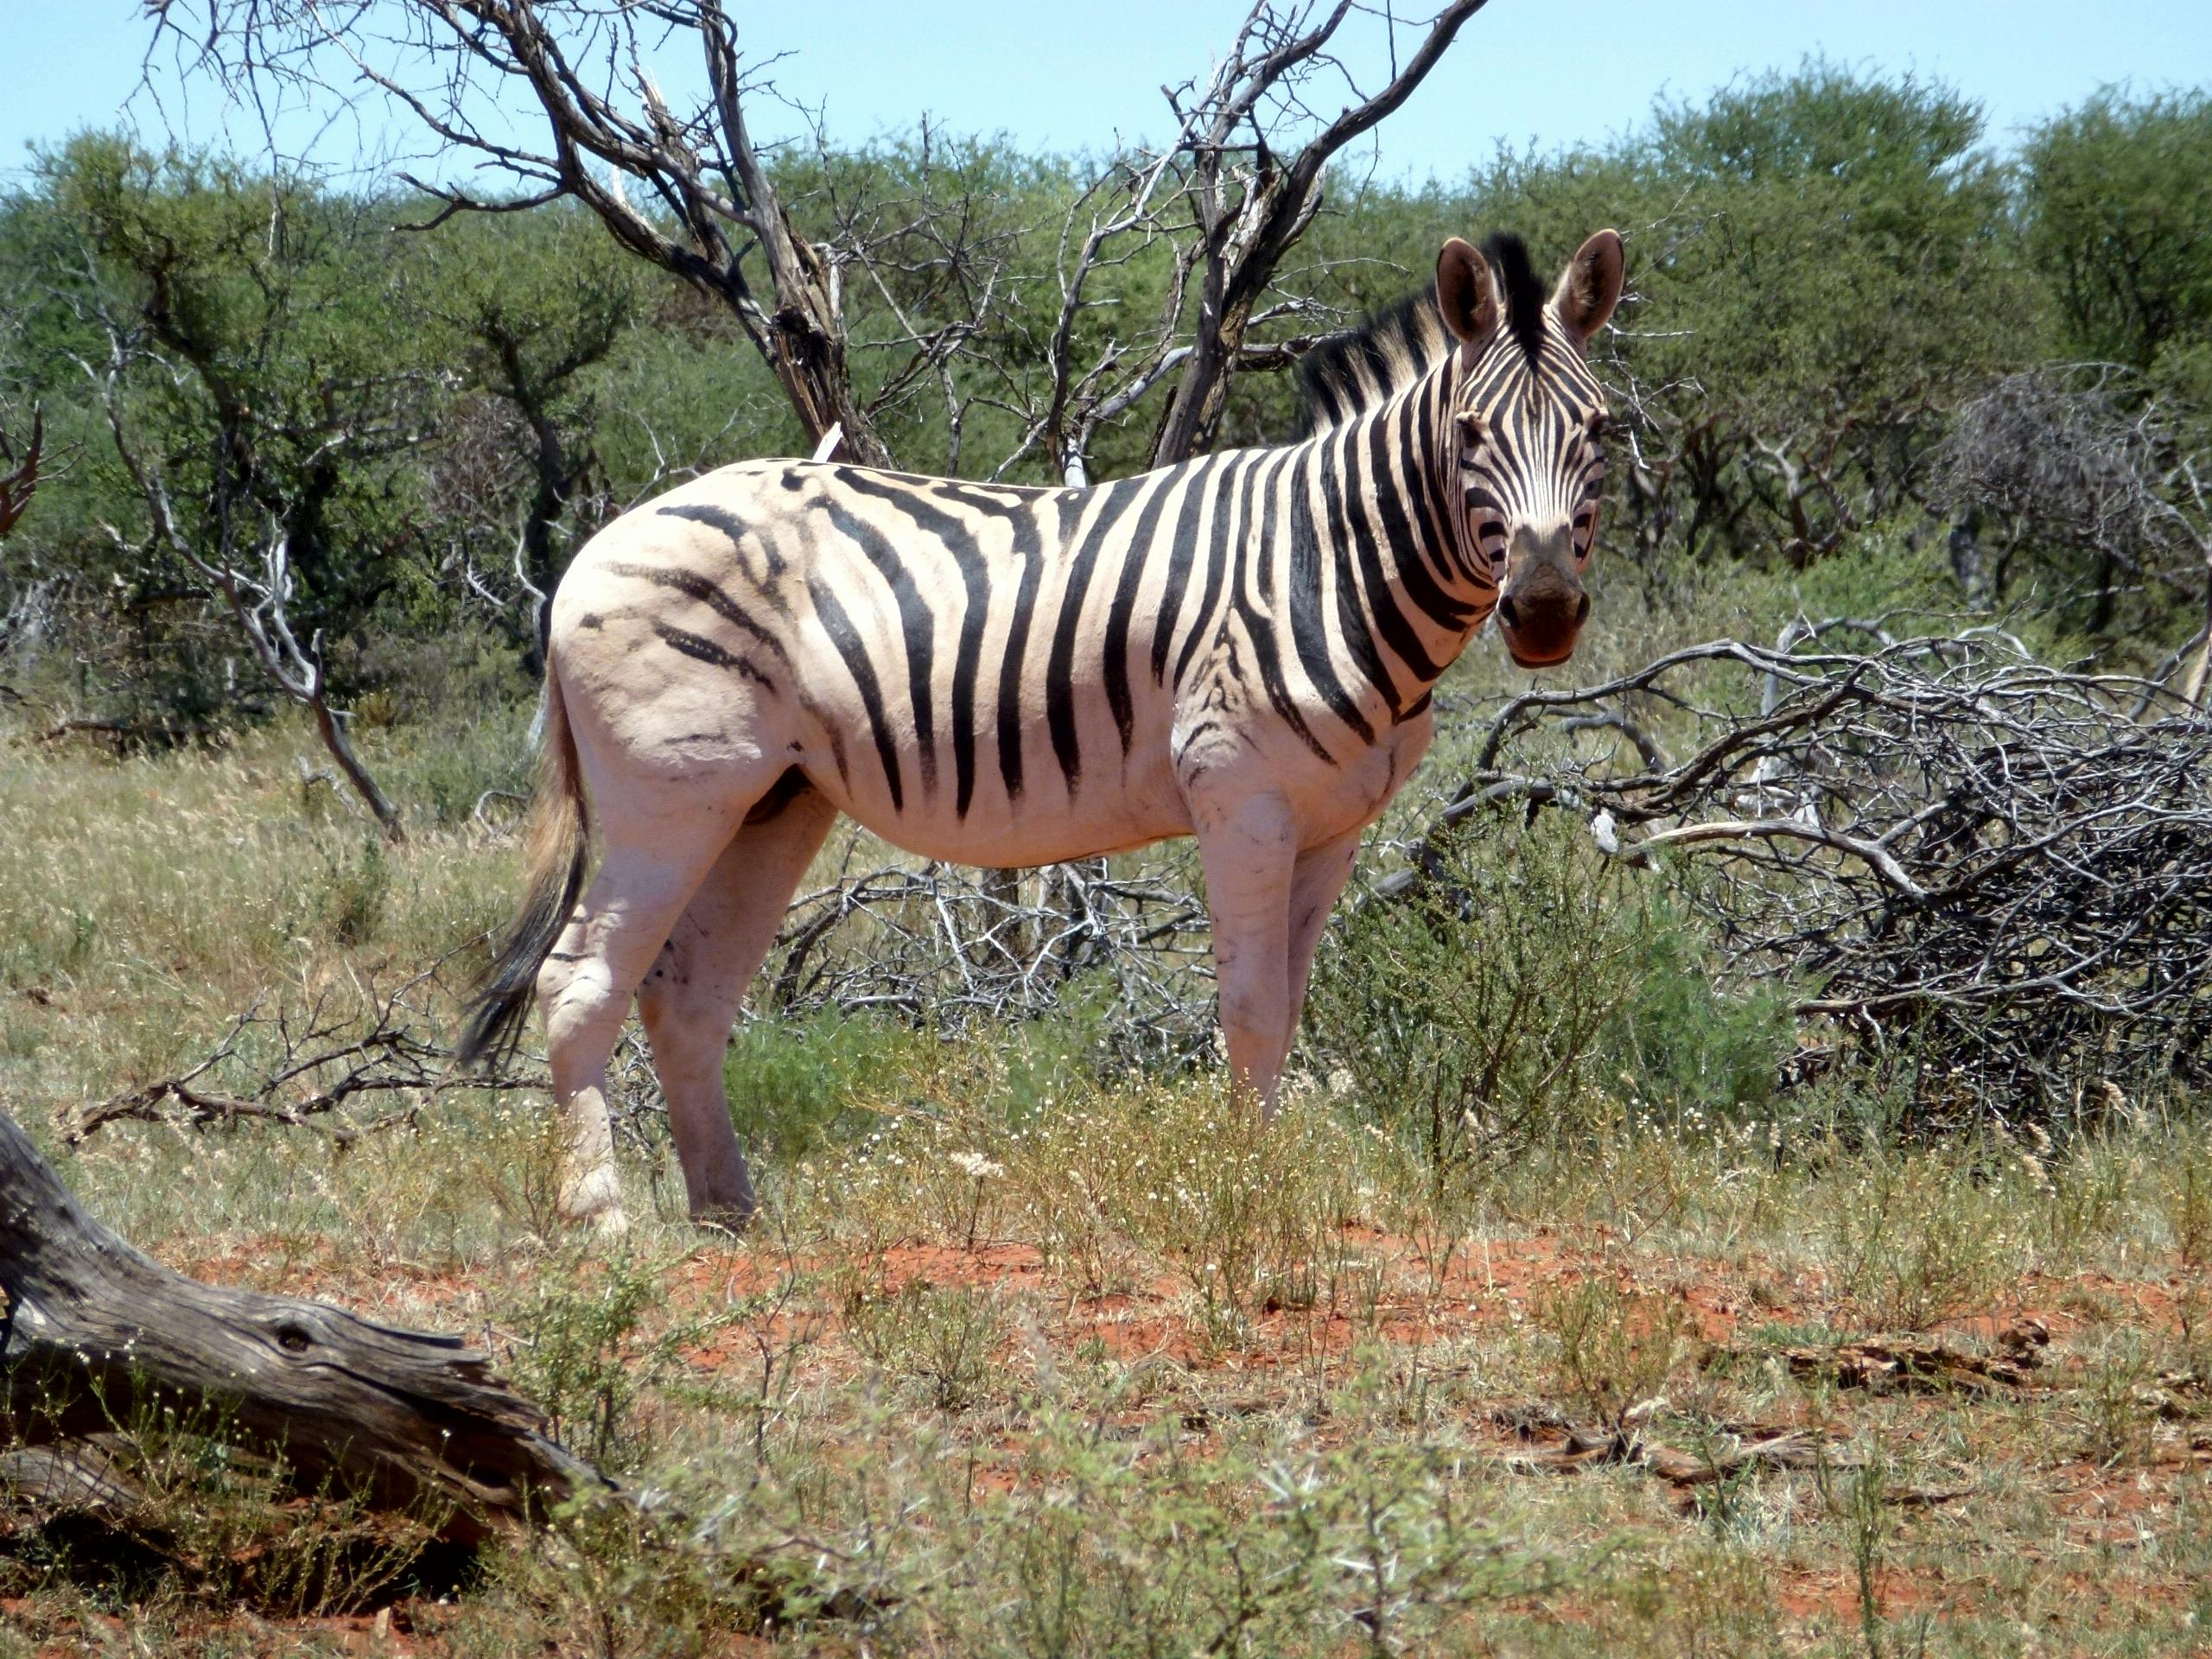 Zebra near bushes | Photo: Pexels